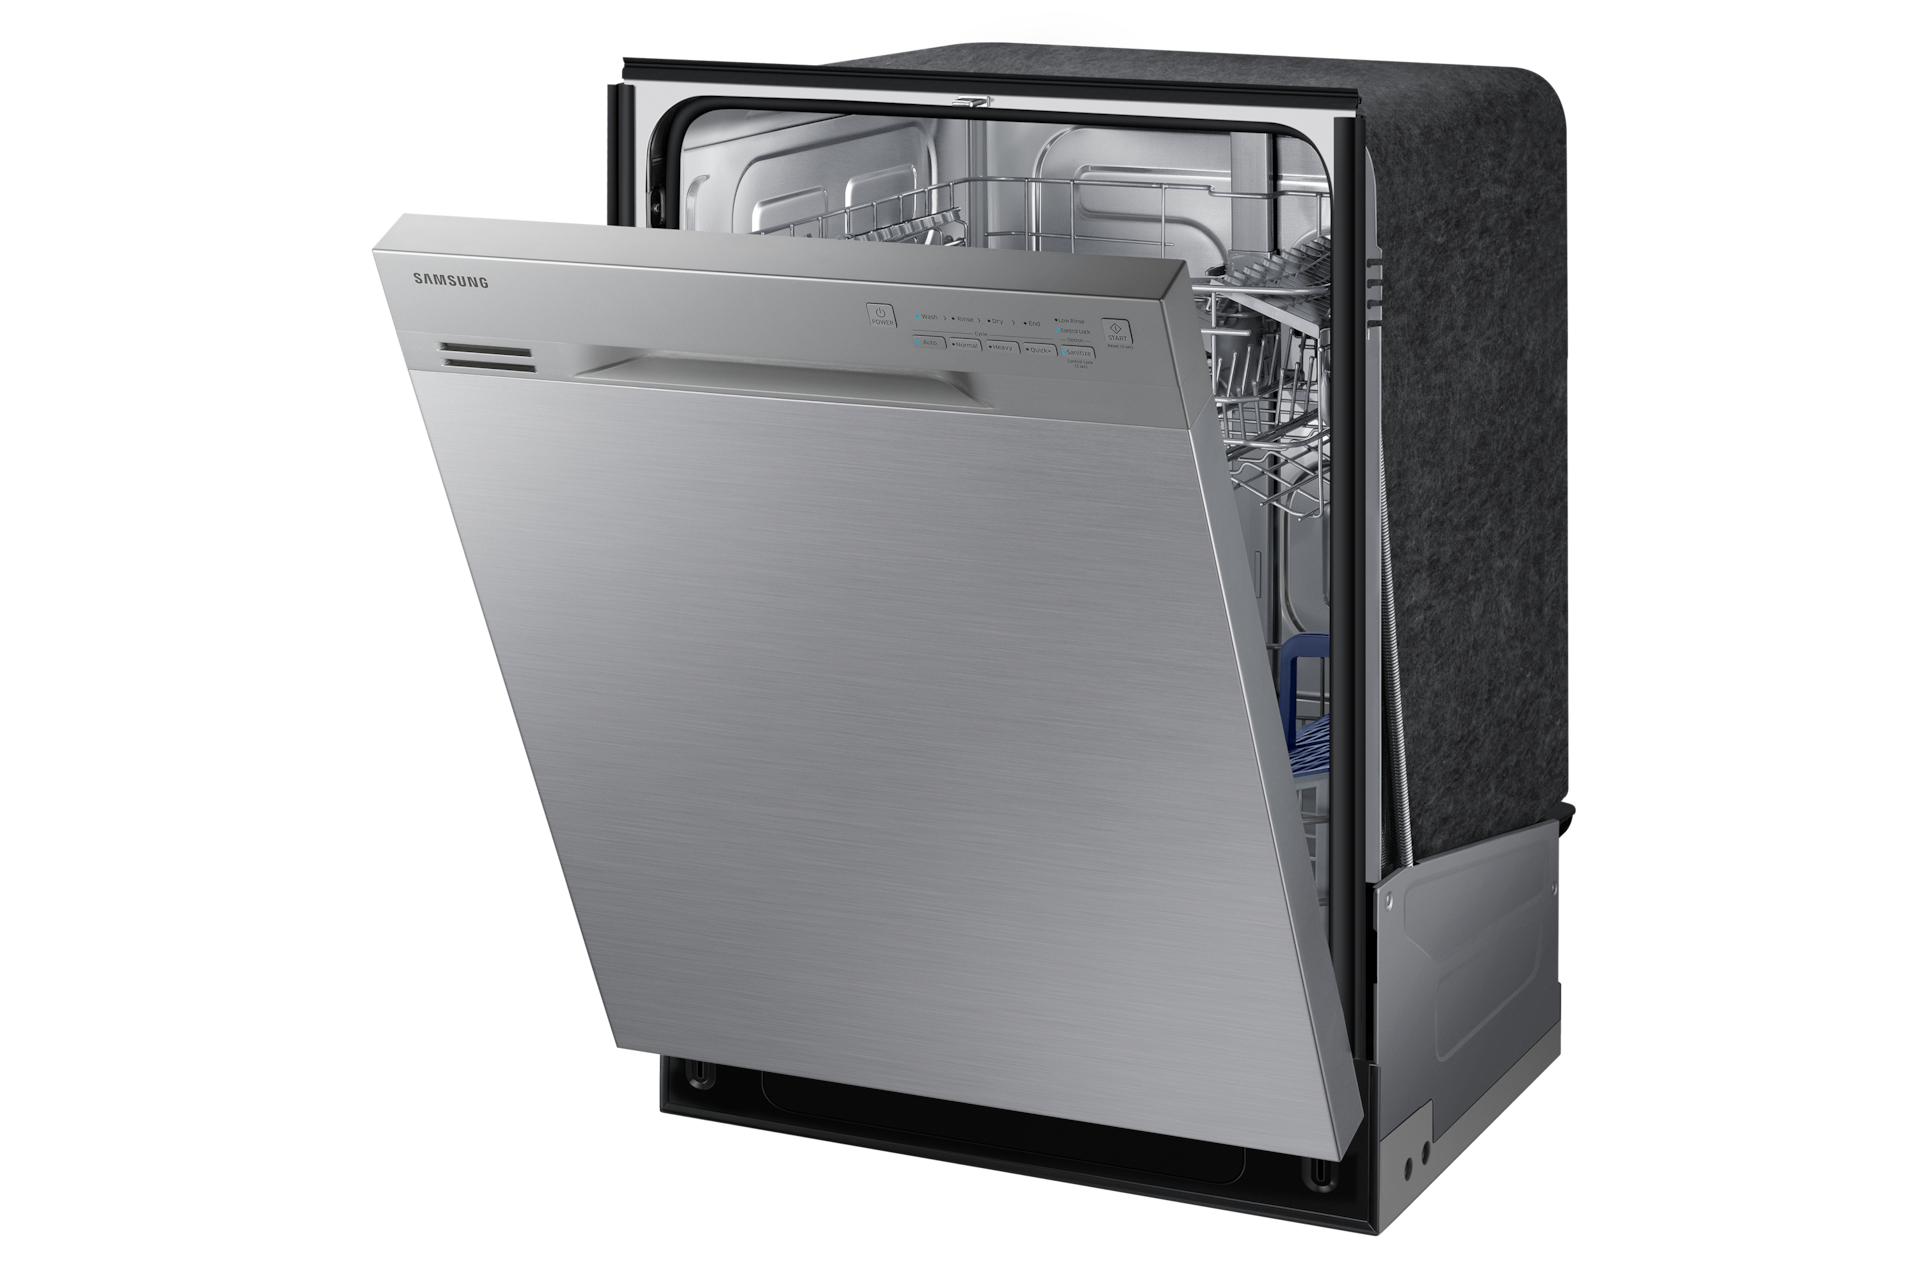 Samsung DW80J3020US Dishwasher with Stainless Steel Tub Samsung CA